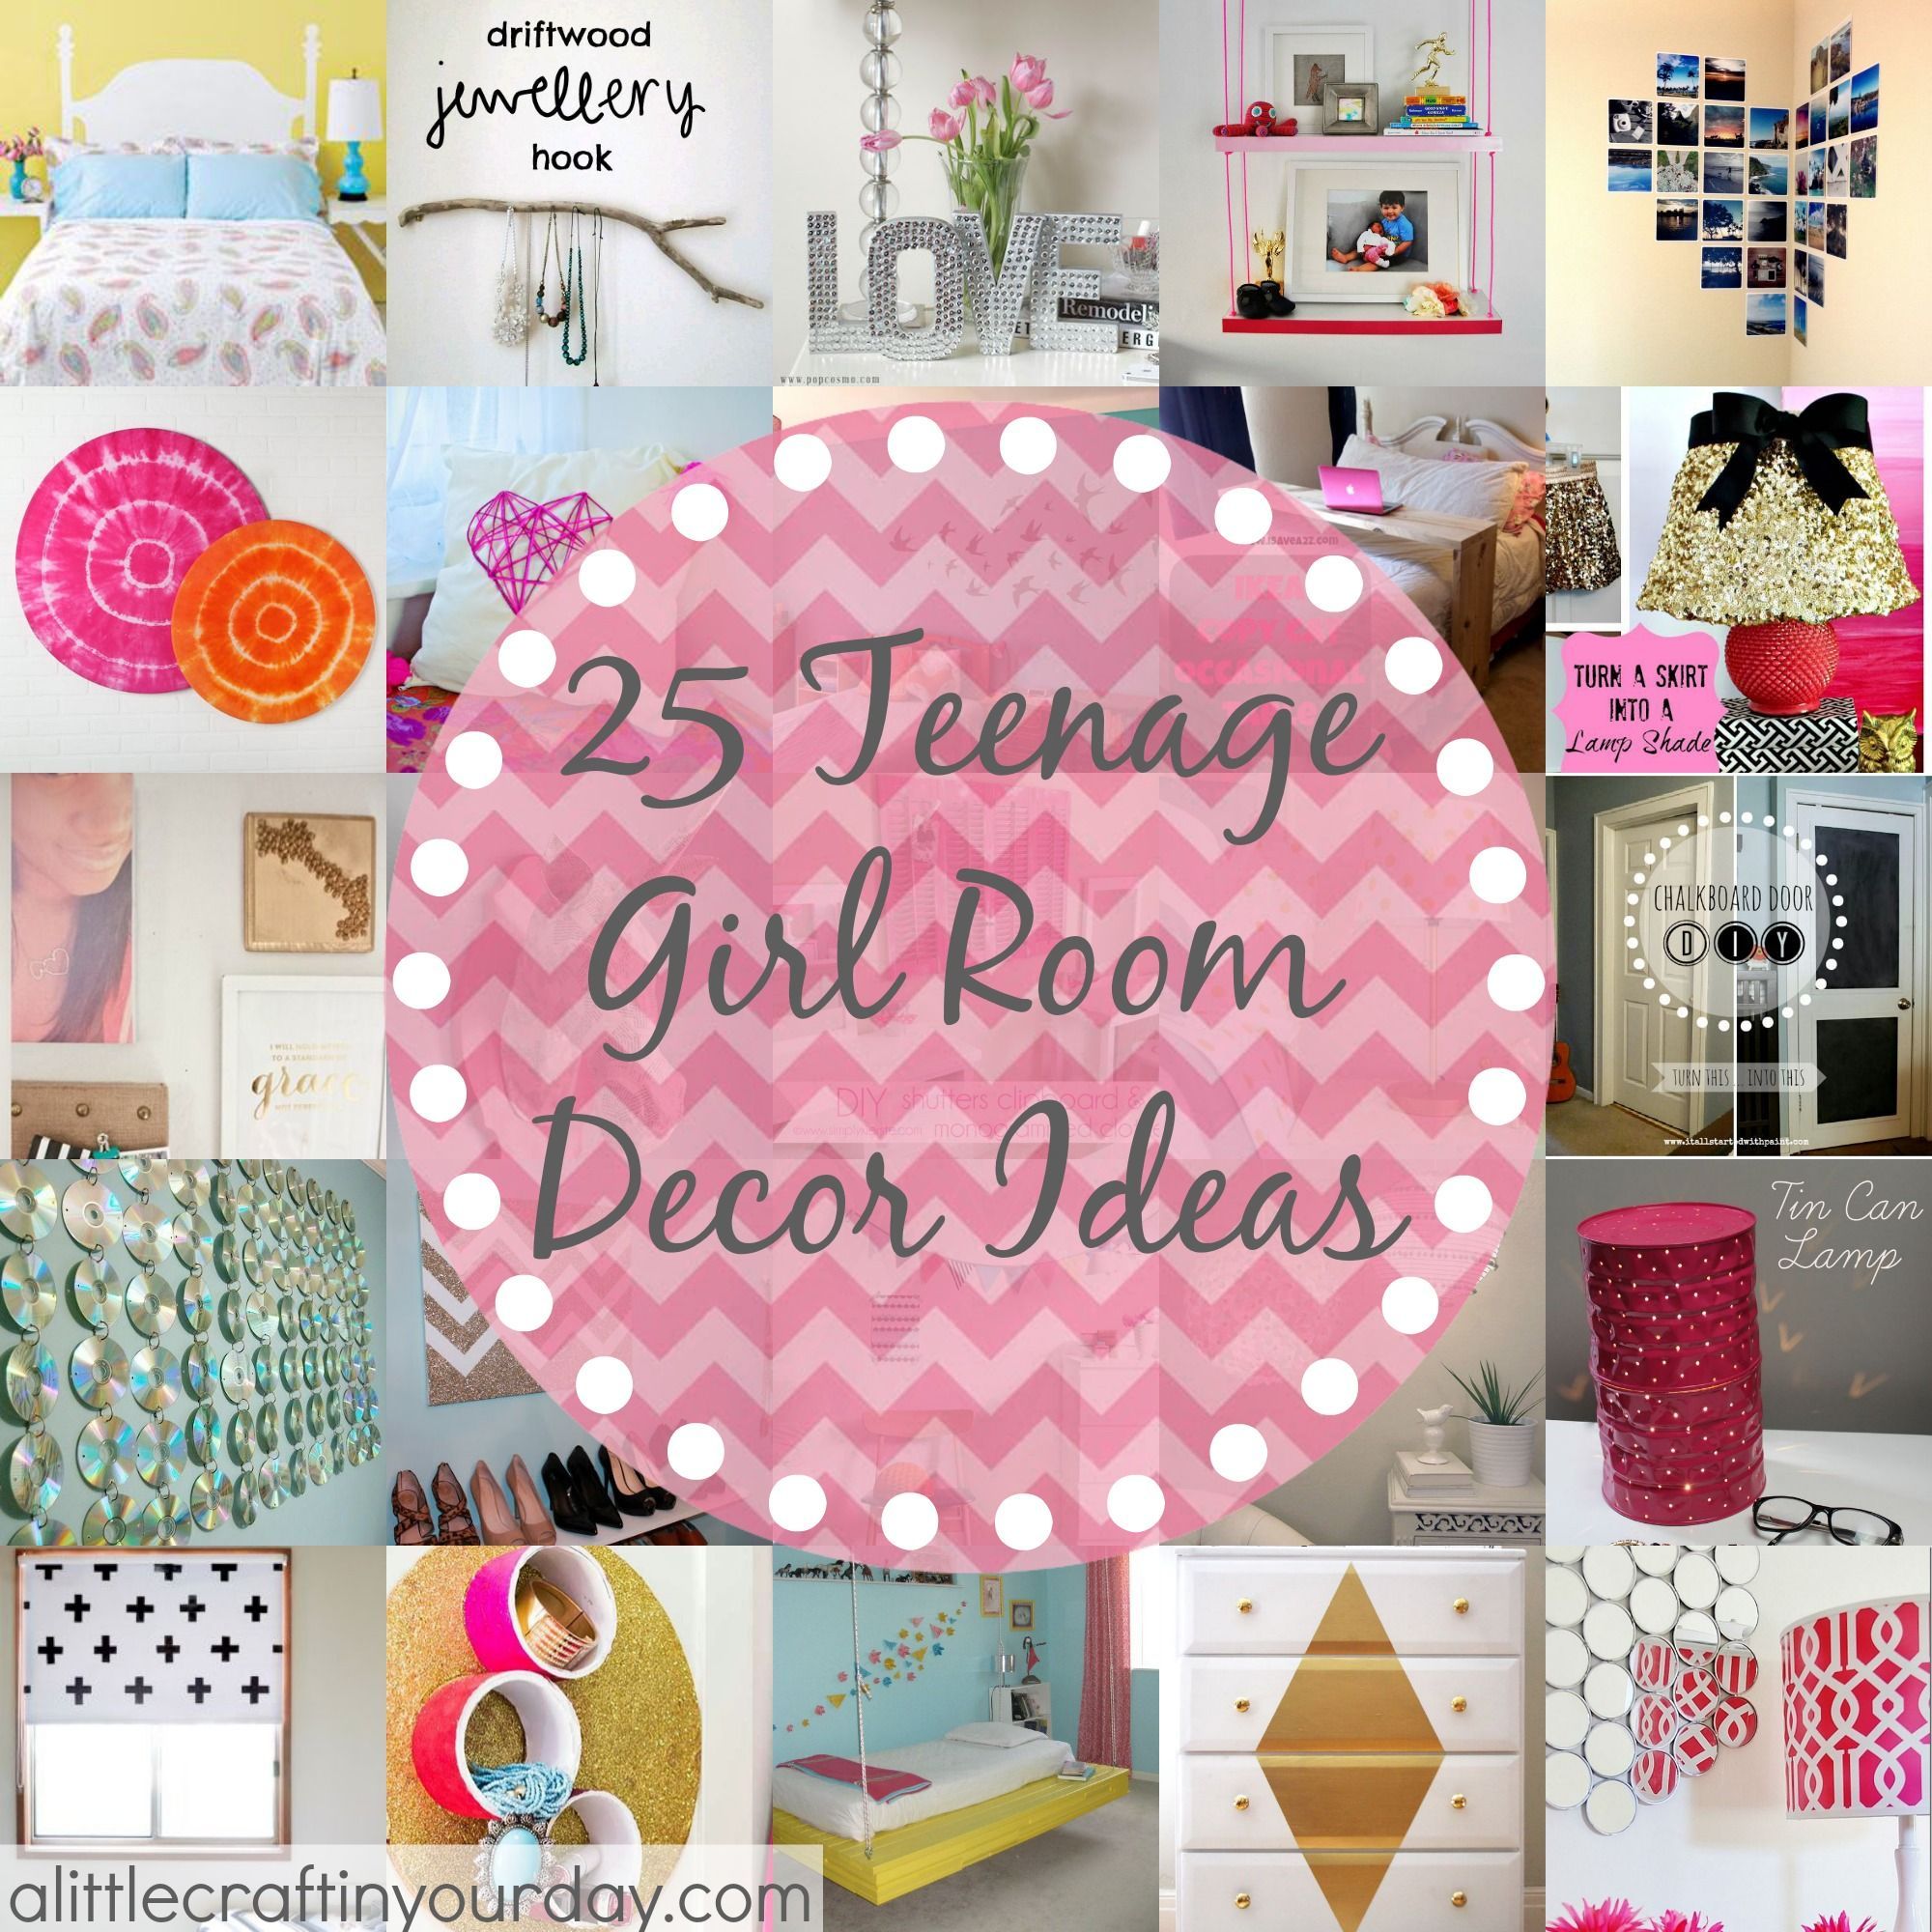 25 More Teenage Girl Room Decor Ideas – A Little Craft In Your DayA Little Craft In Your Day